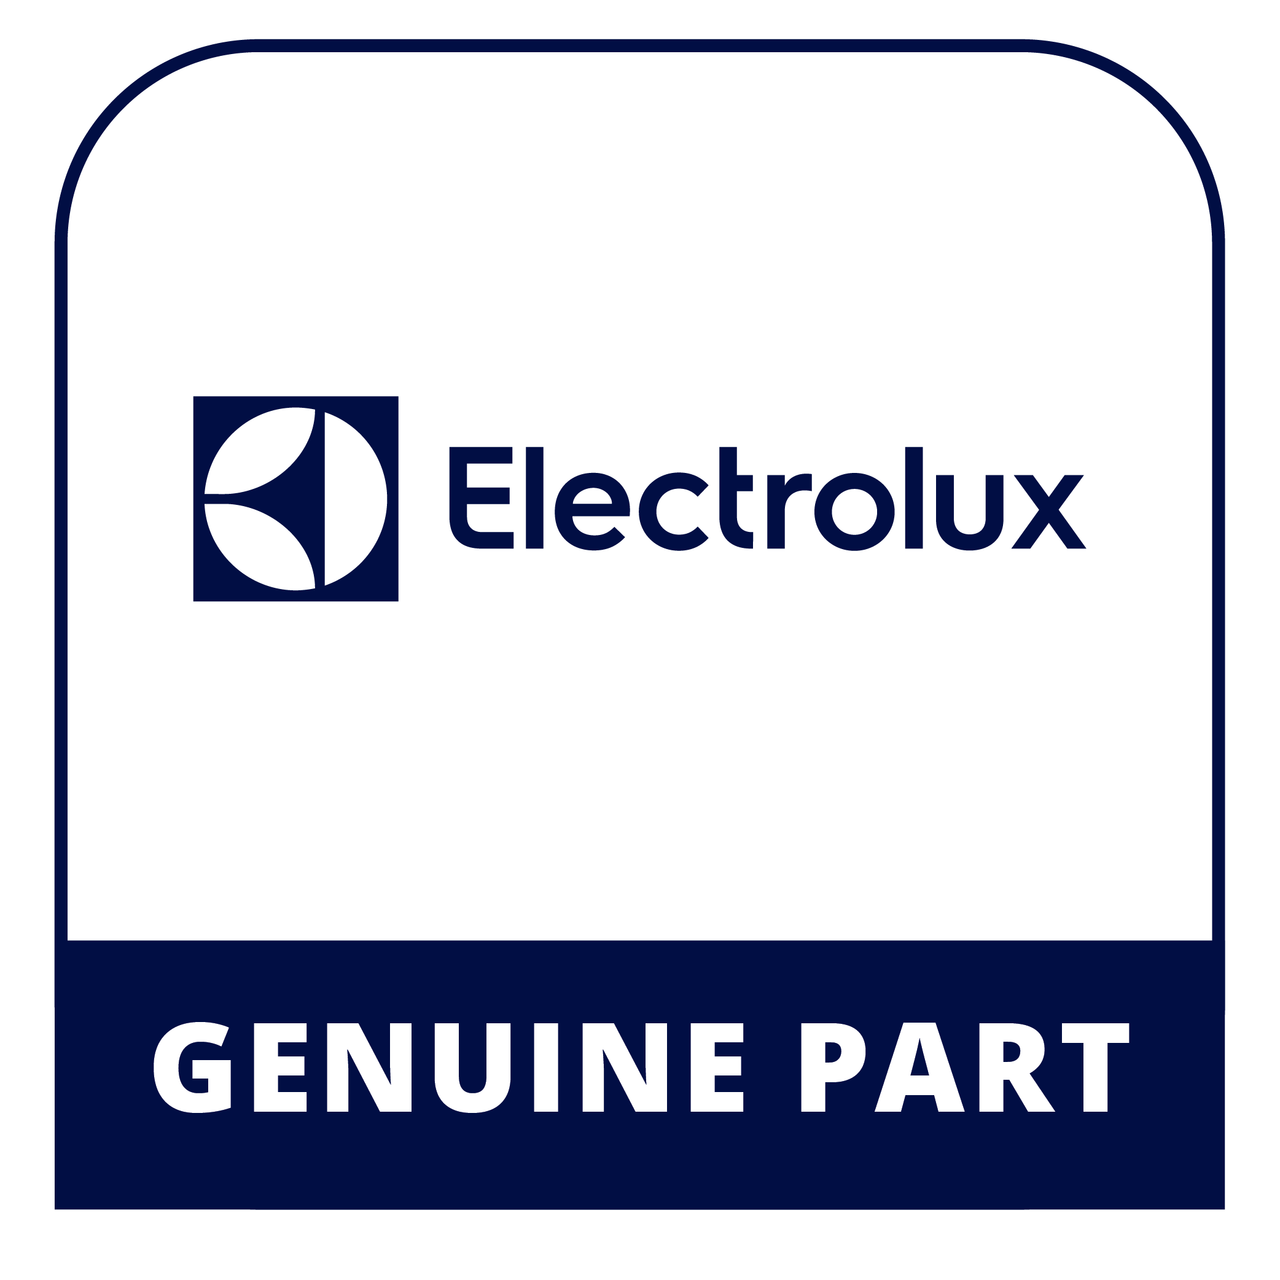 Frigidaire - Electrolux 316564300 Shield - Genuine Electrolux Part